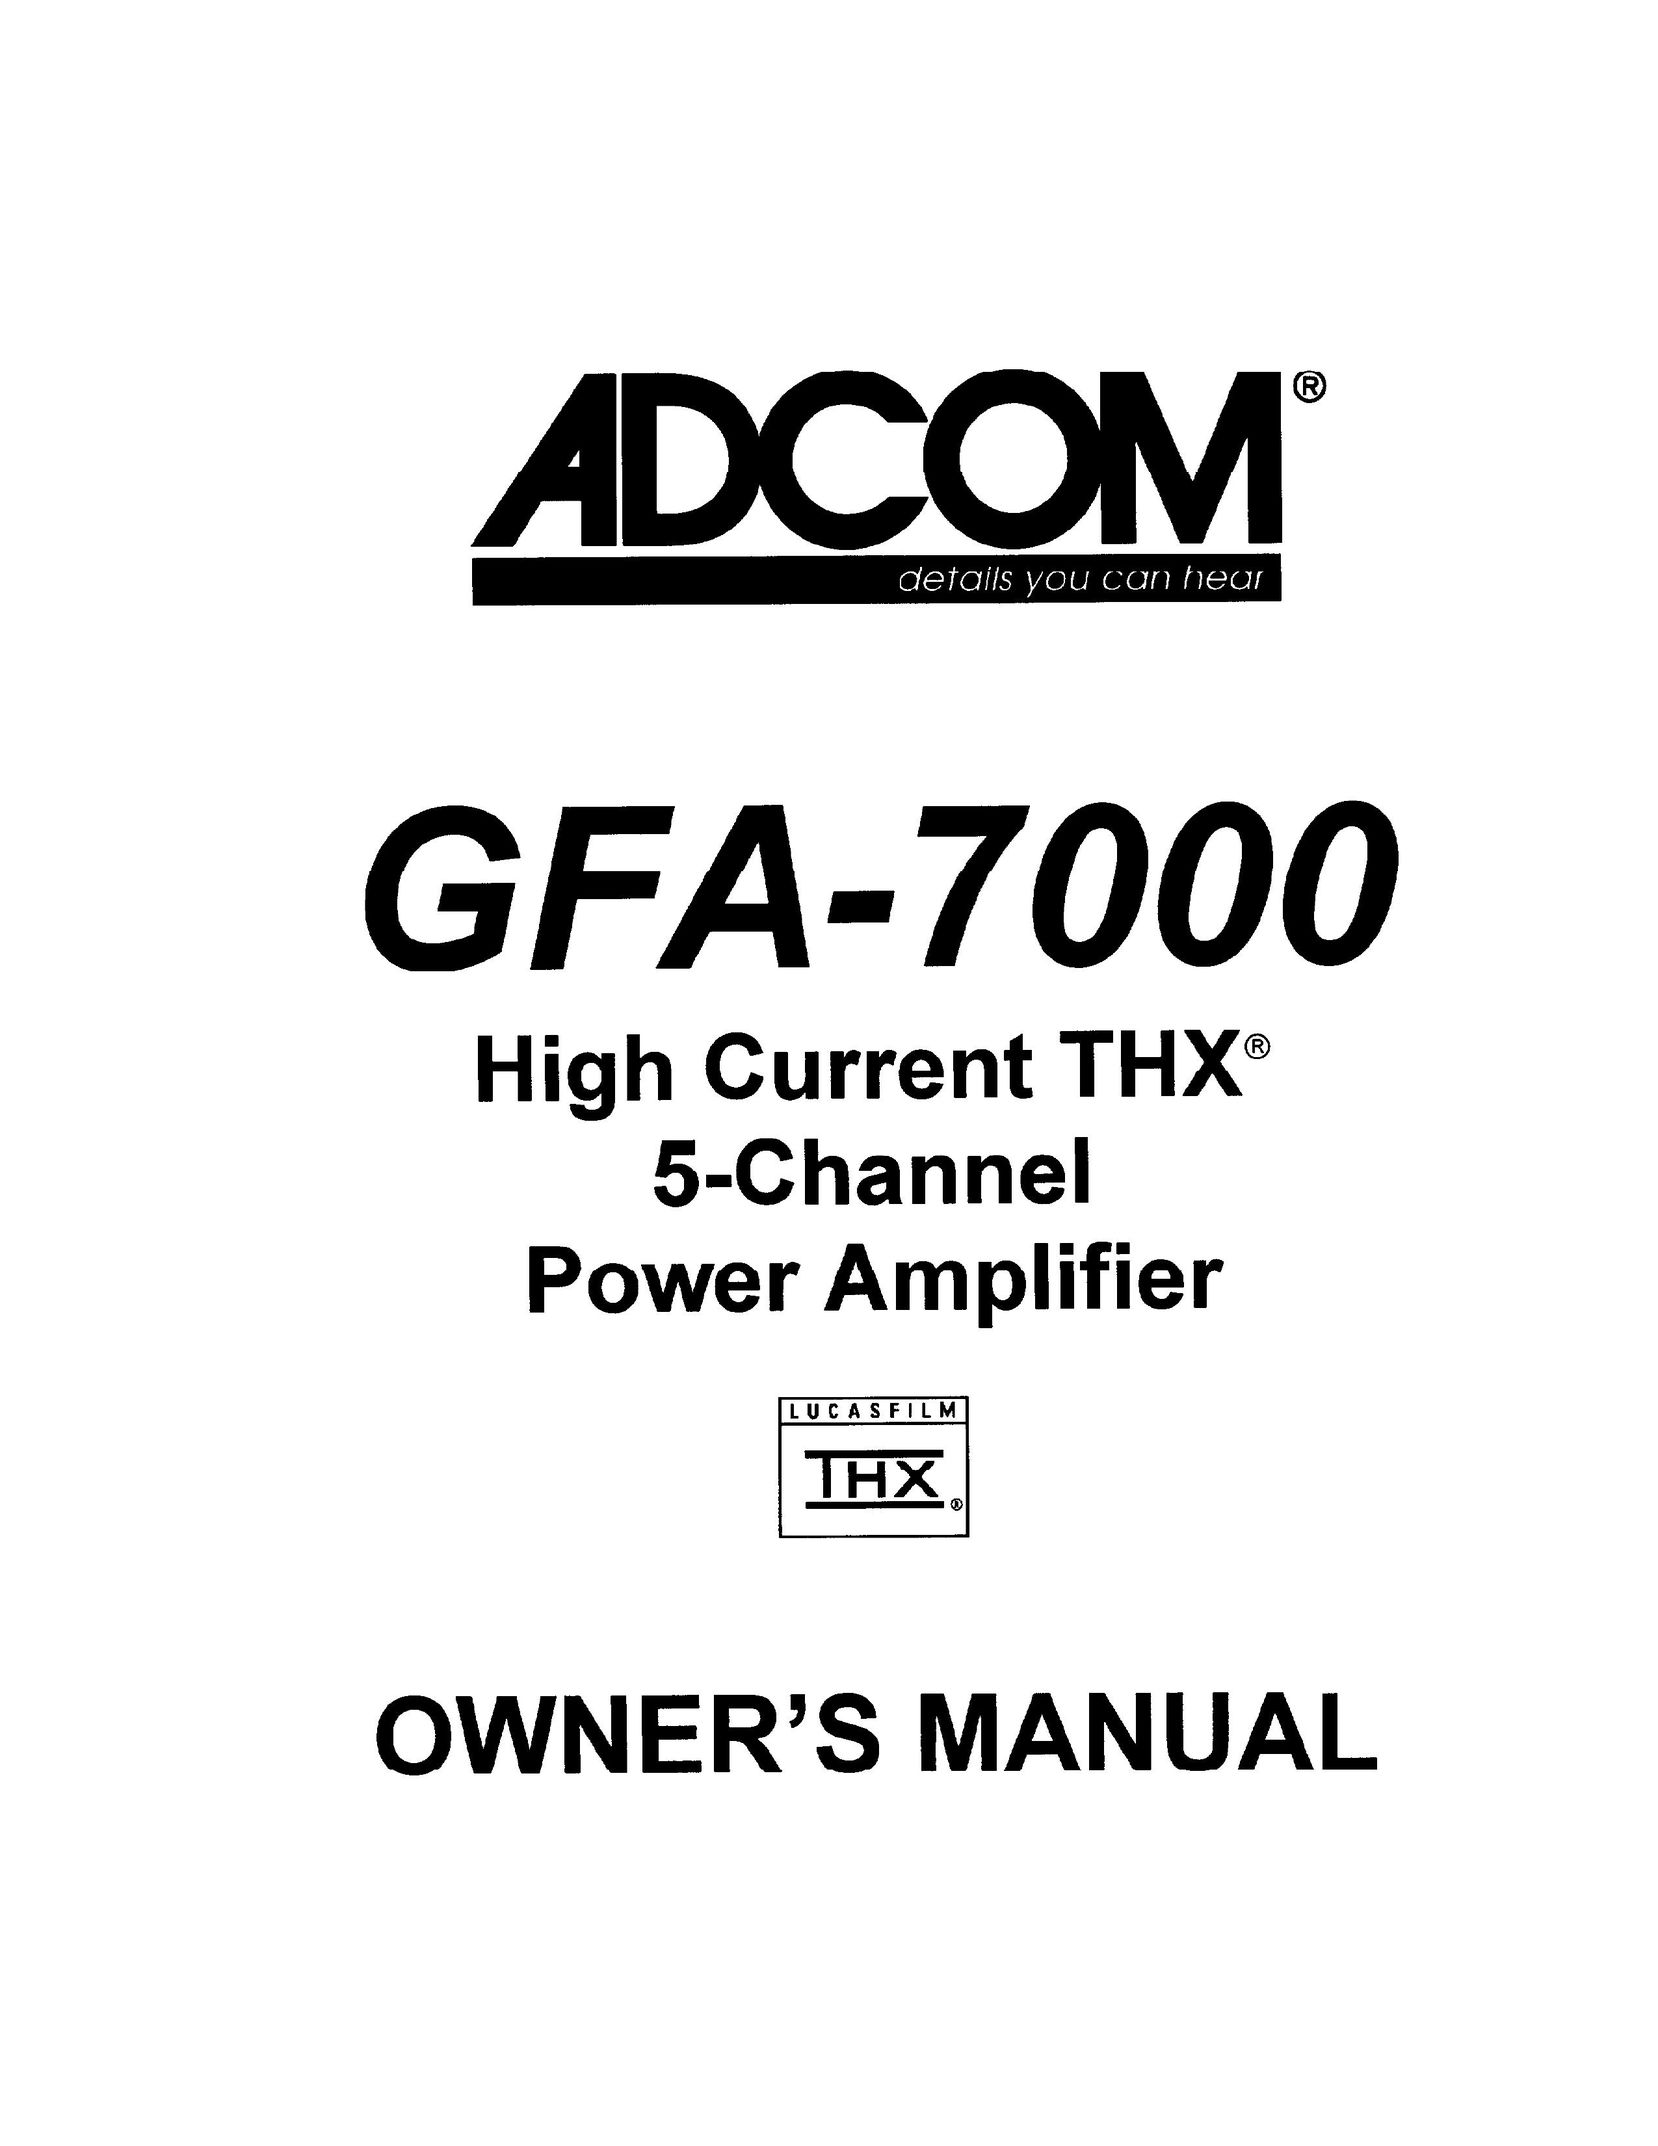 Adcom GFA-7000 Stereo Amplifier User Manual (Page 1)